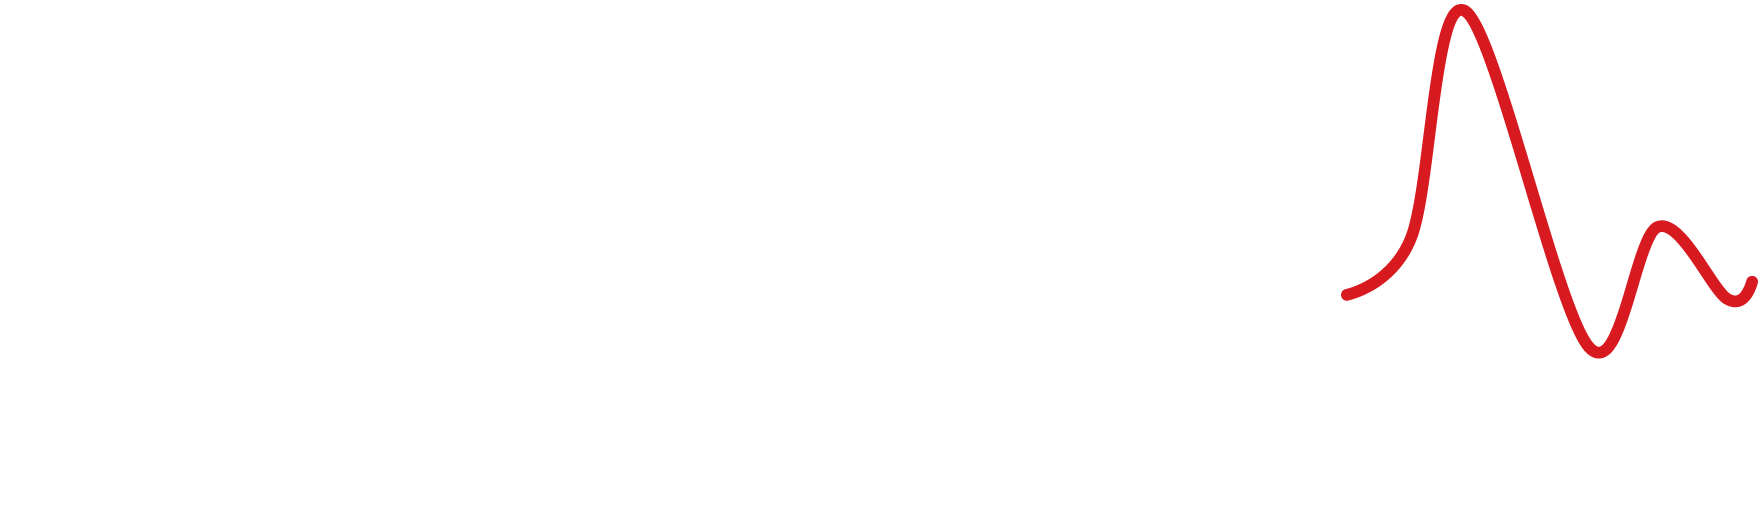 Mostcare Up tag logo